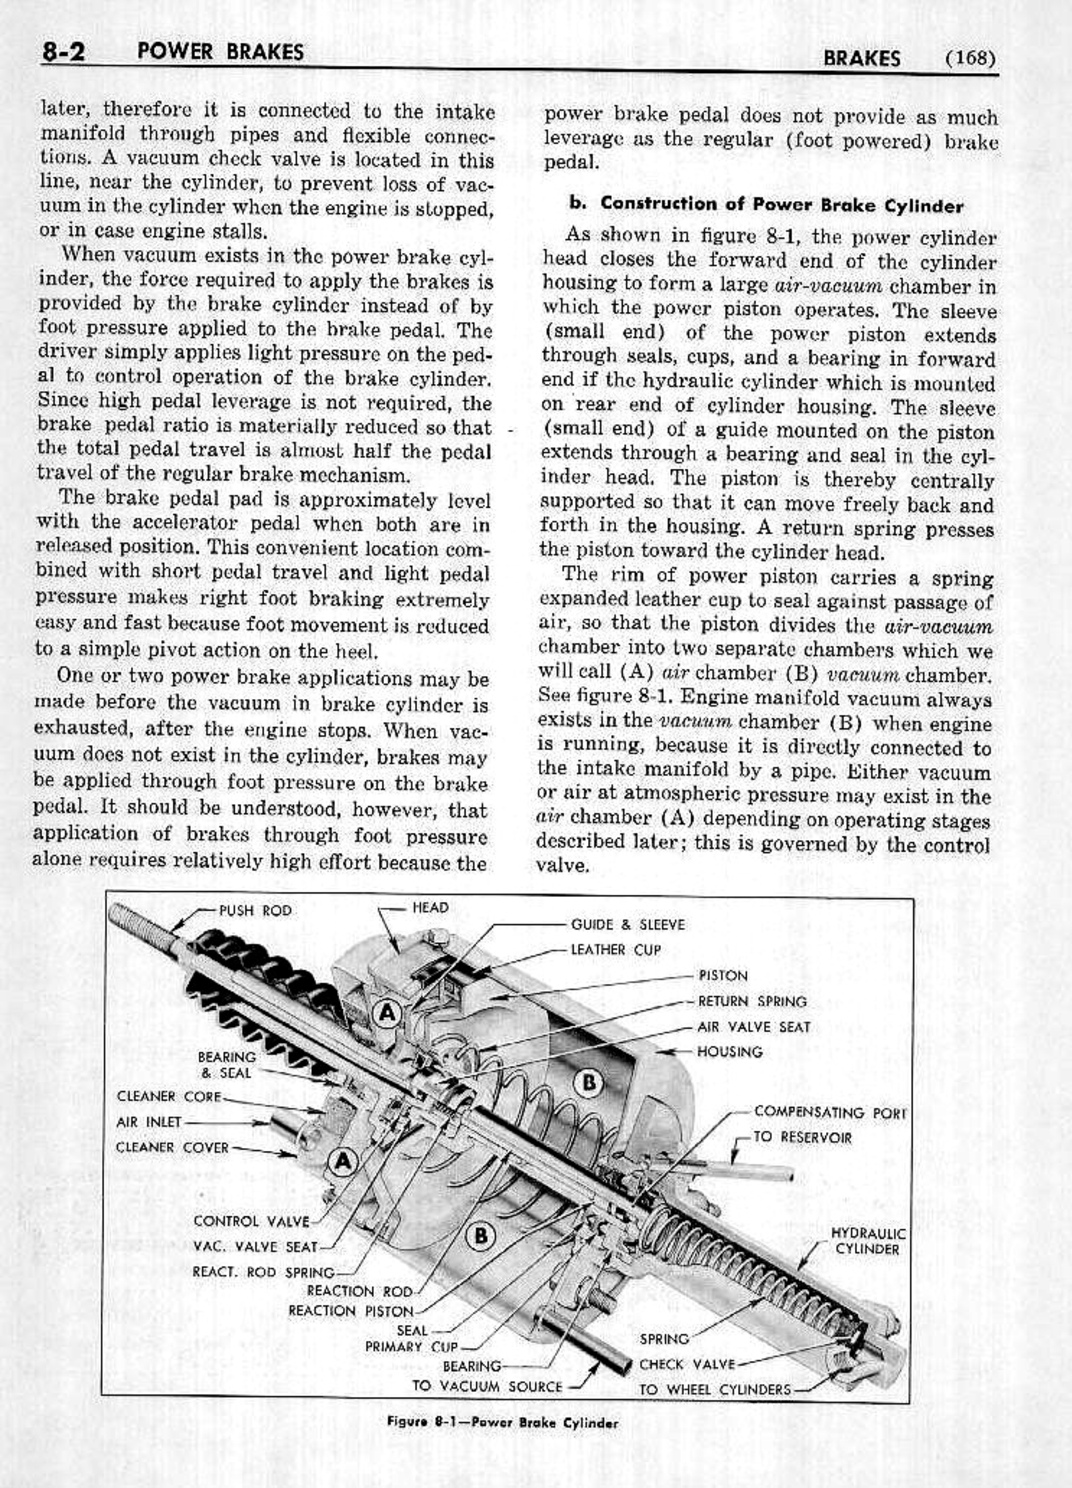 n_09 1953 Buick Shop Manual - Brakes-002-002.jpg